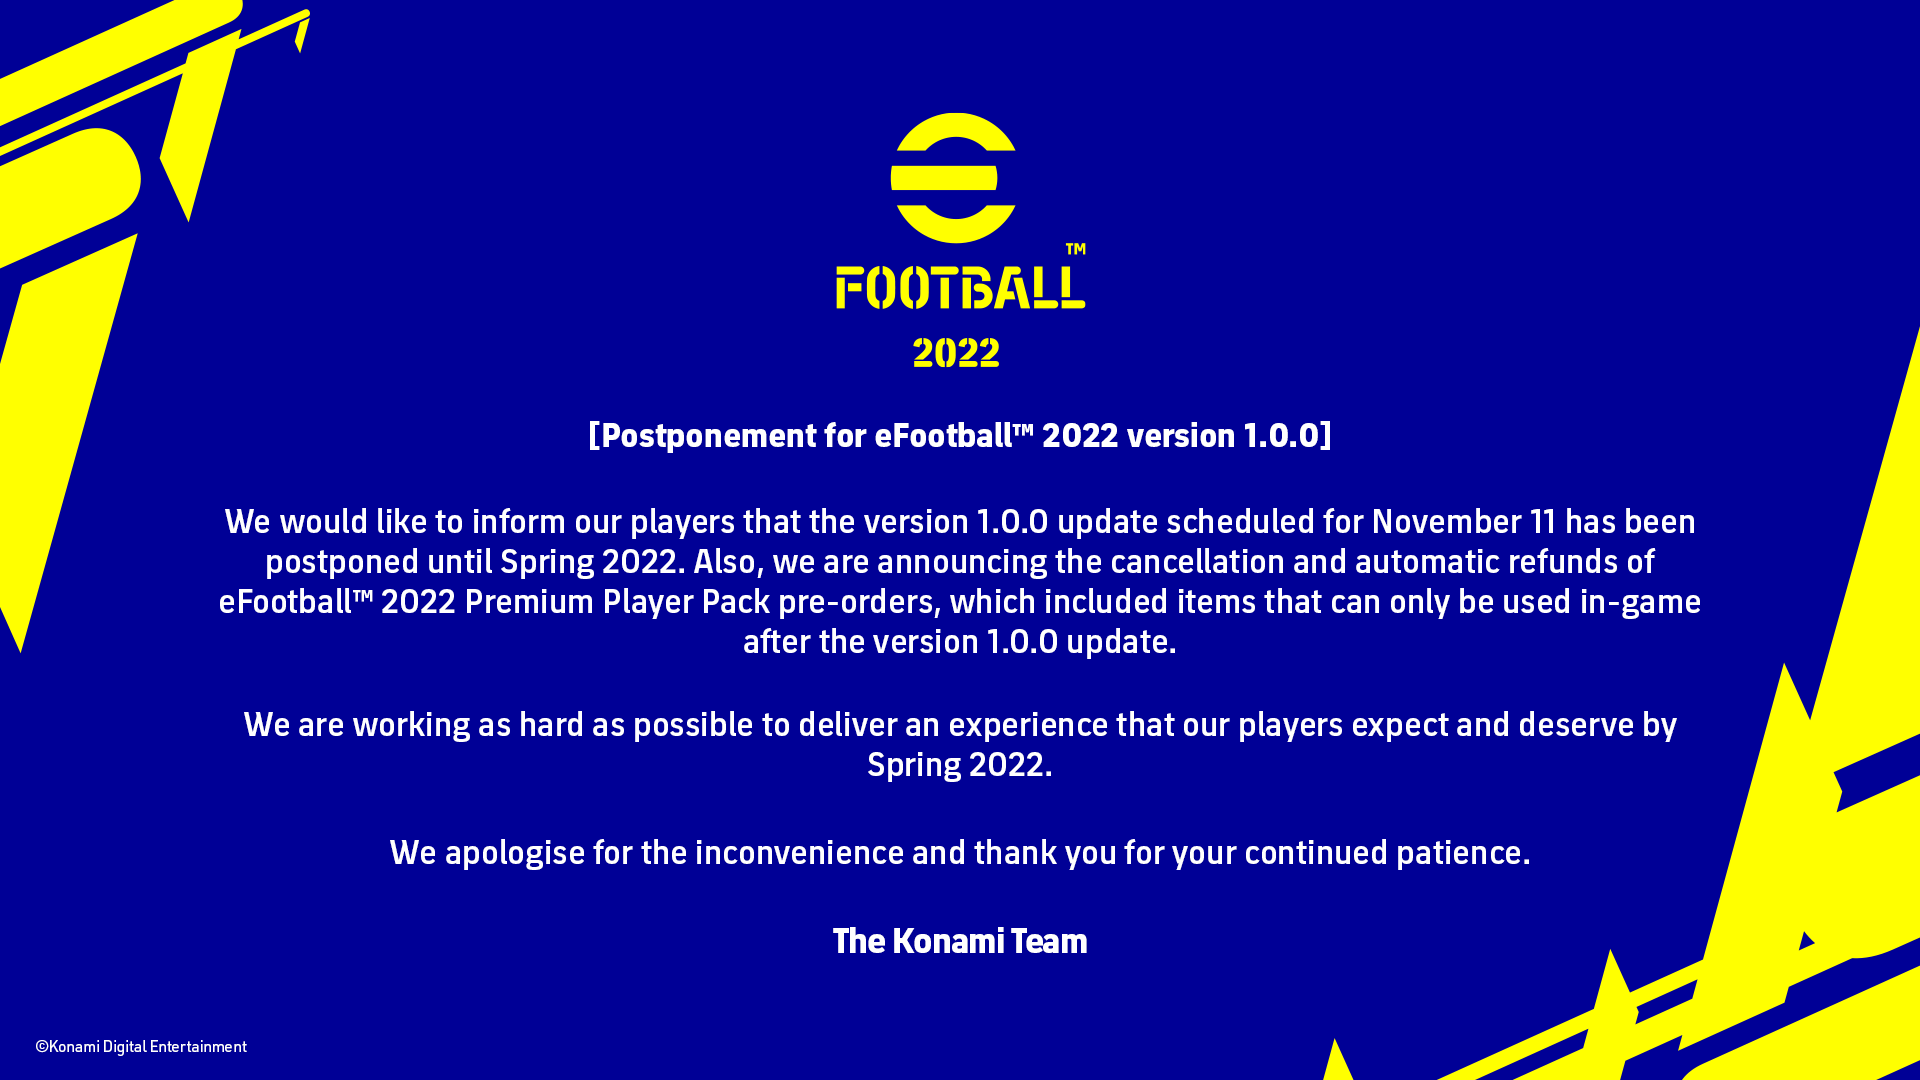 efootball 2022 Spring 2022 delay